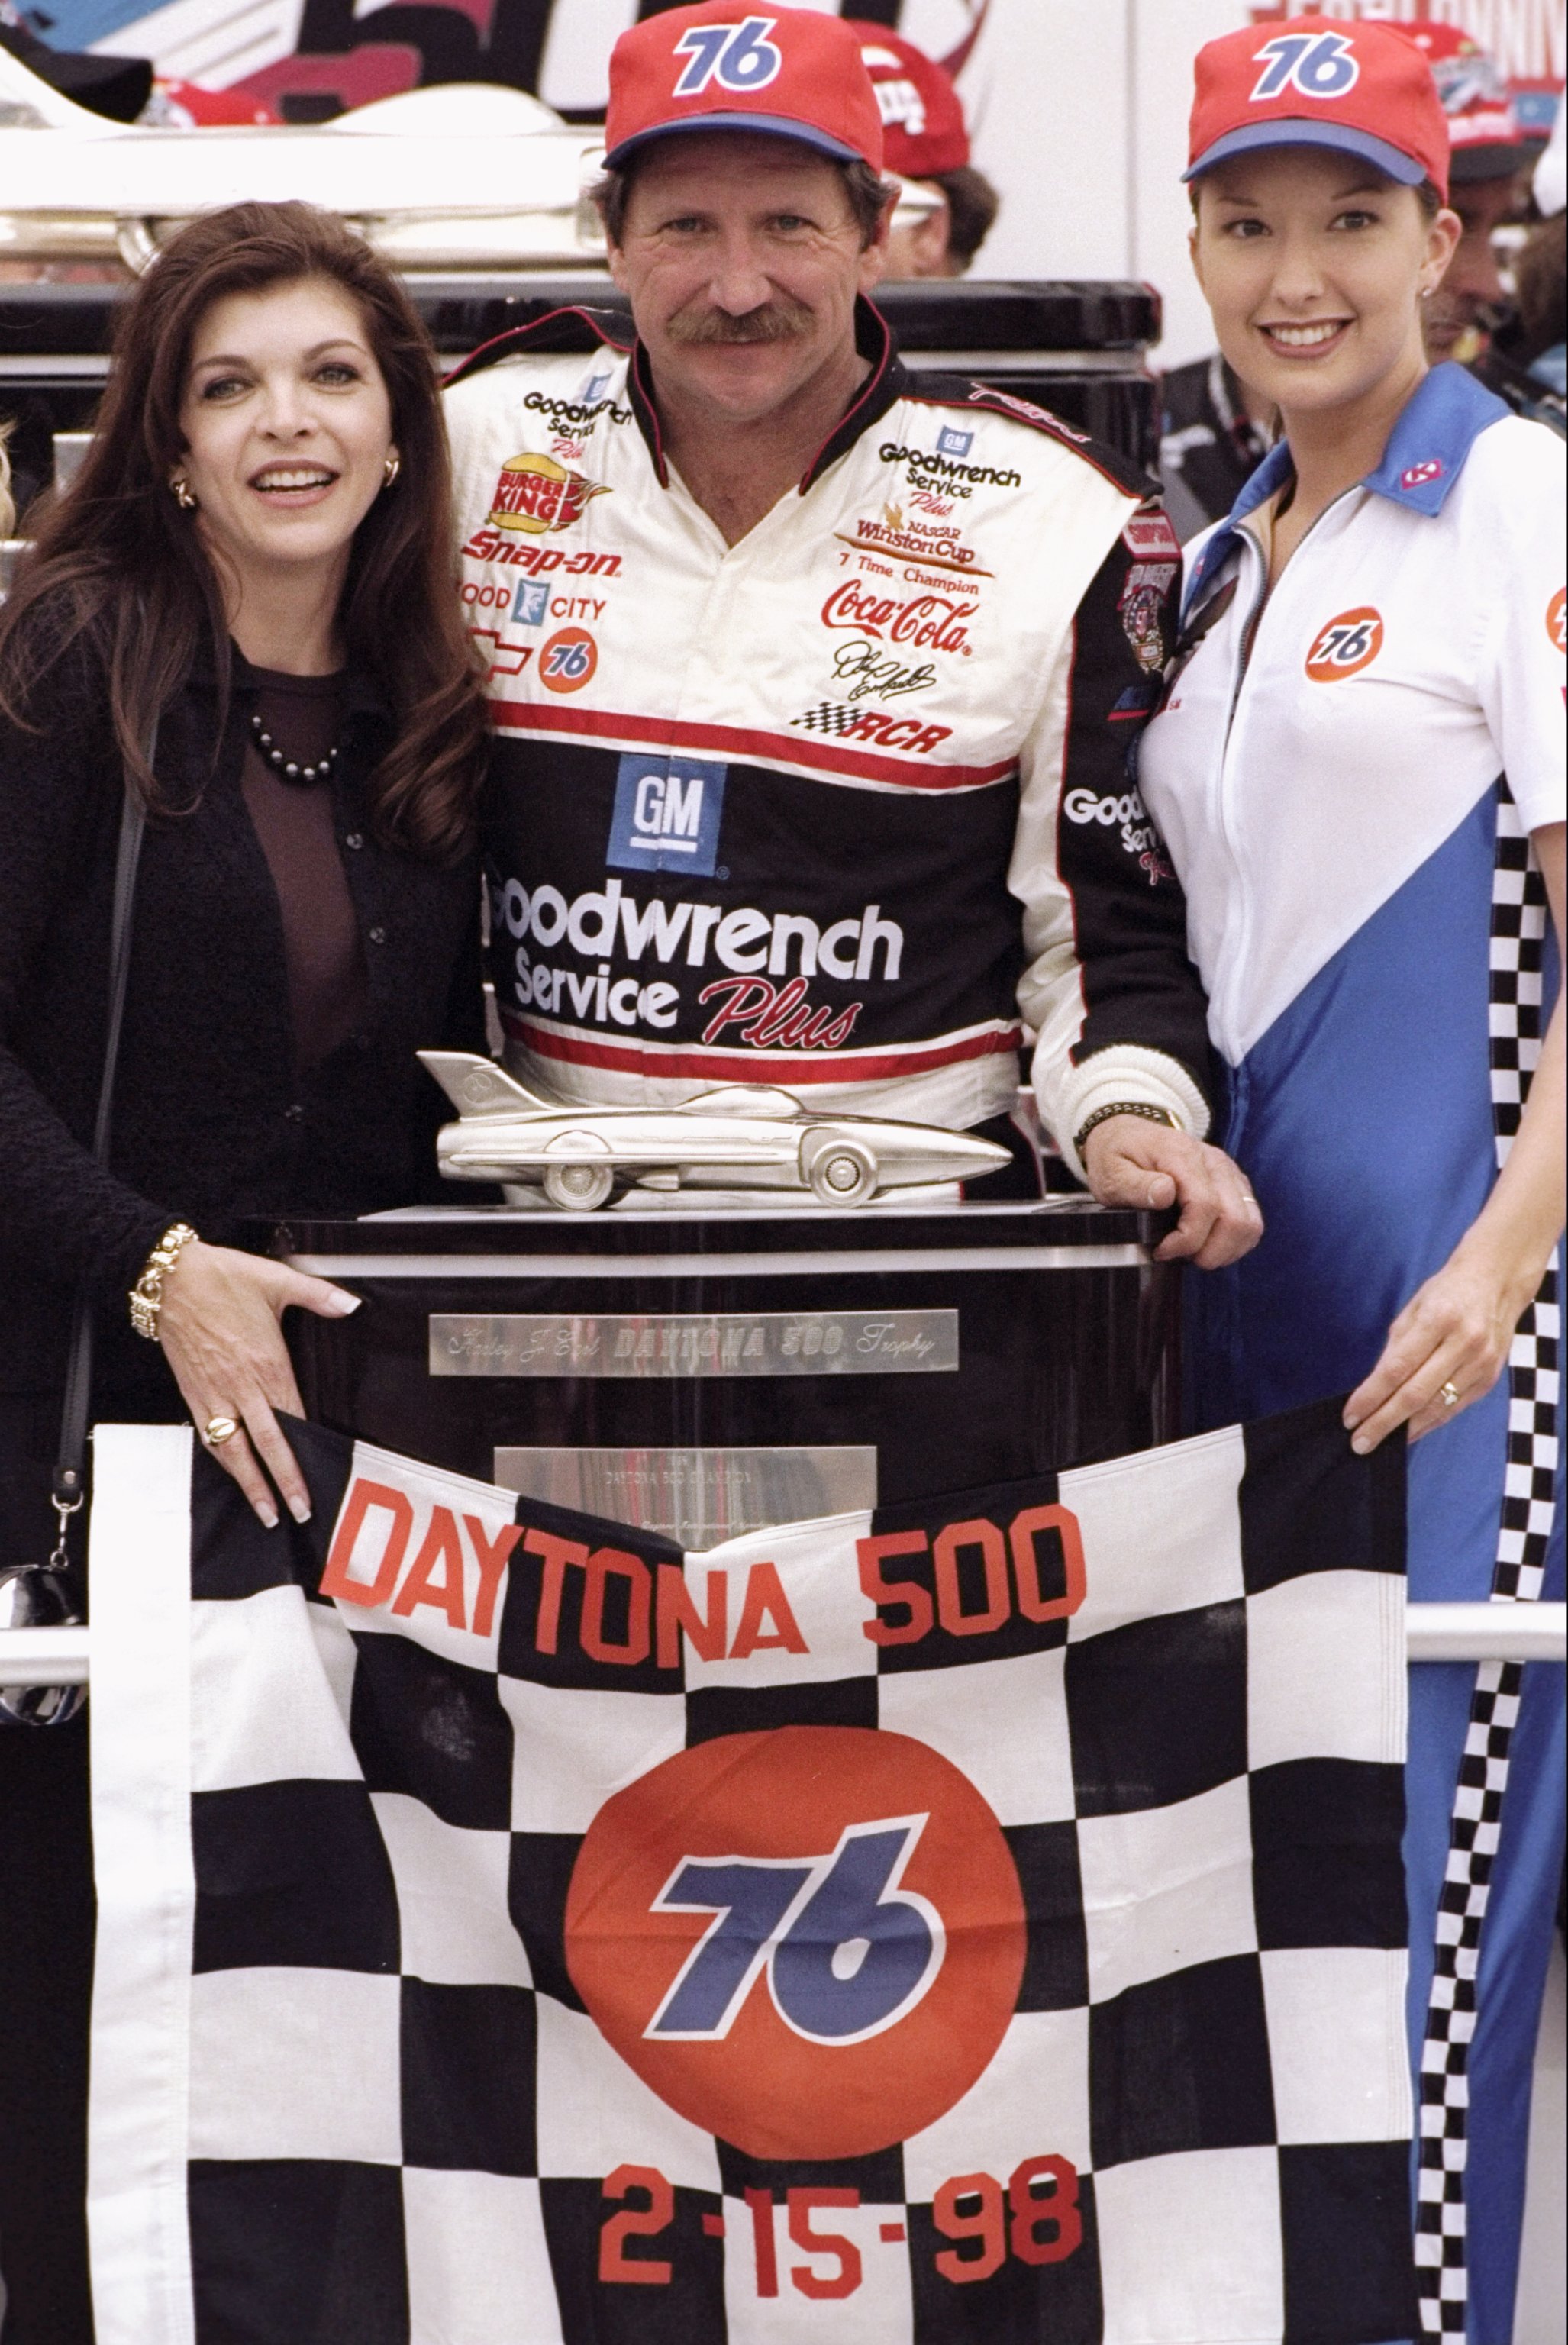 DAYTONA BEACH - FEBRUARY 15: Dale Earnhardt Sr. driver of the #3 GM Goodwrench Chevrolet celebrates with his wife Teresa after winning the Daytona 500 on February 15, 1998 at Daytona International Speedway in Daytona Beach, Florida. (Photo by David Taylor